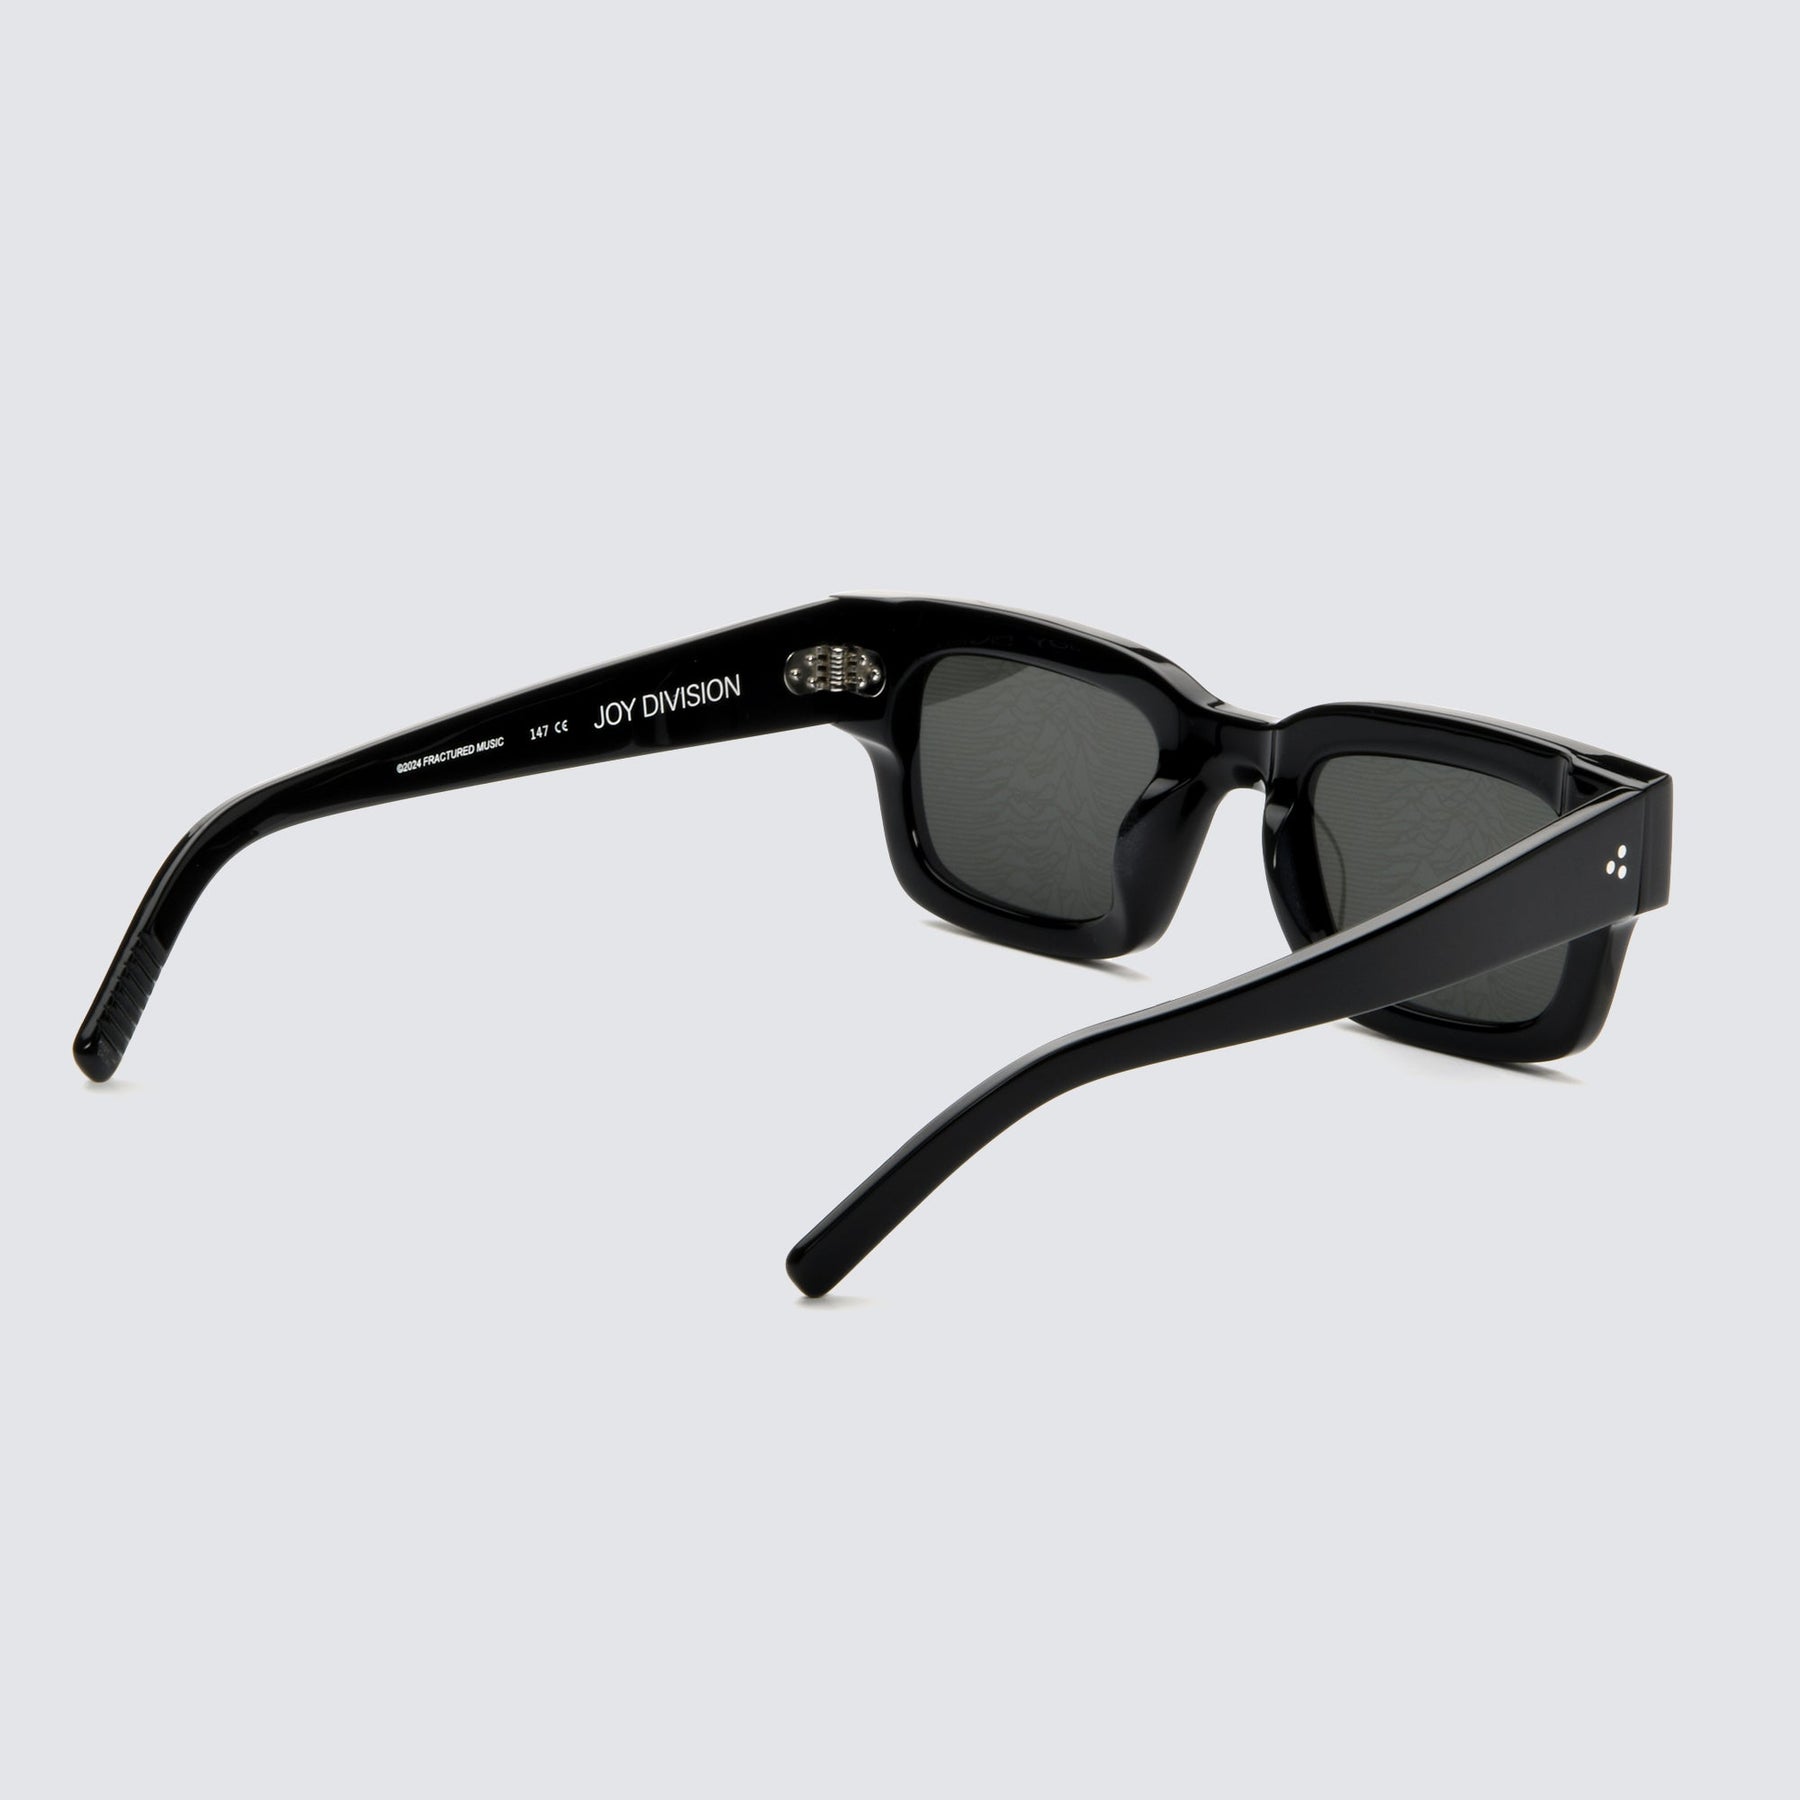 Akila Sunglasses - Aries in Black